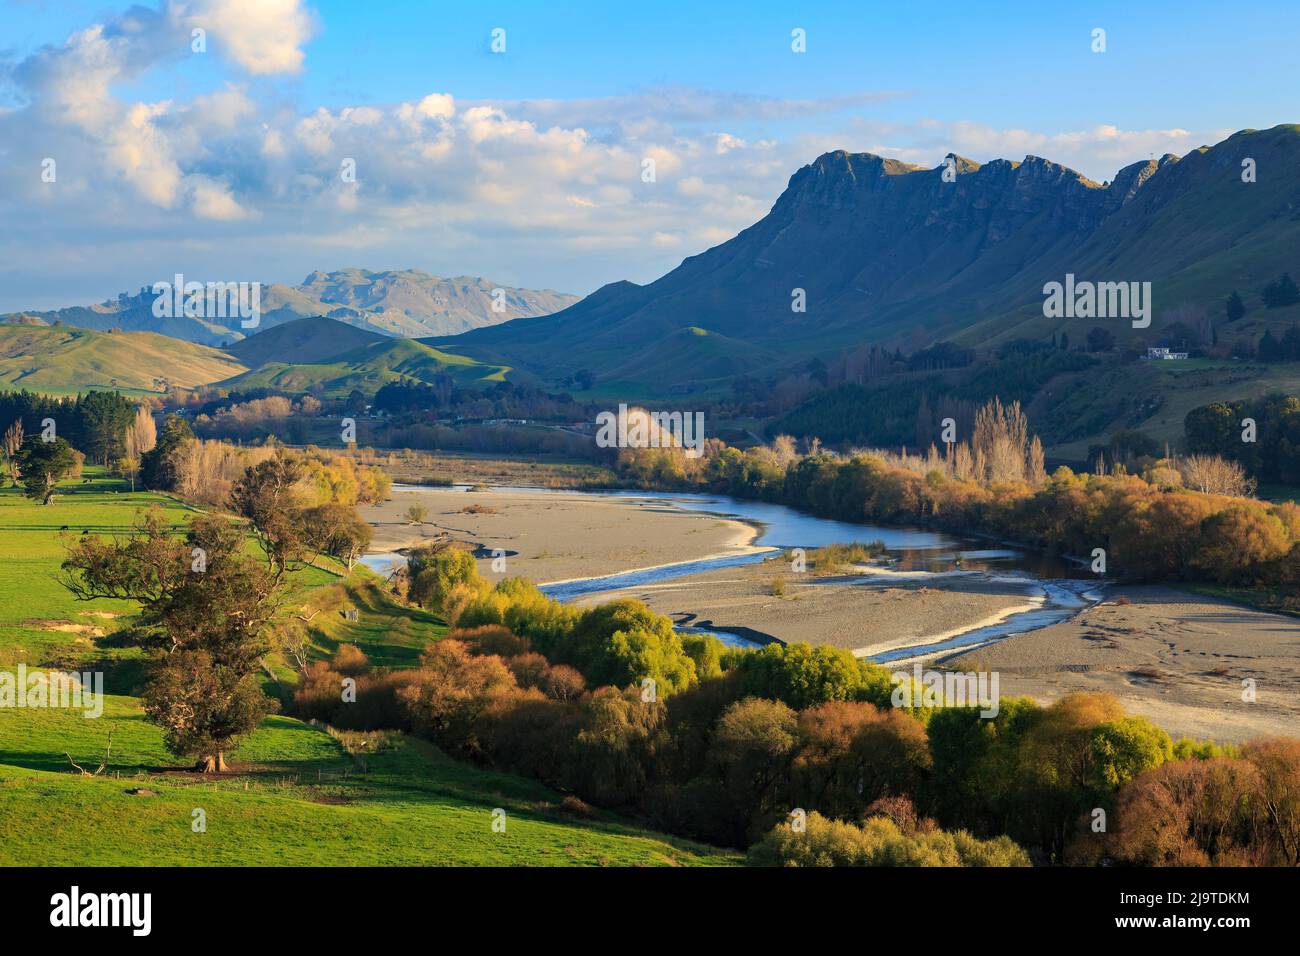 A view of Te Mata Peak and the Tukituki River in the Hawke's Bay region, New Zealand, in autumn Stock Photo